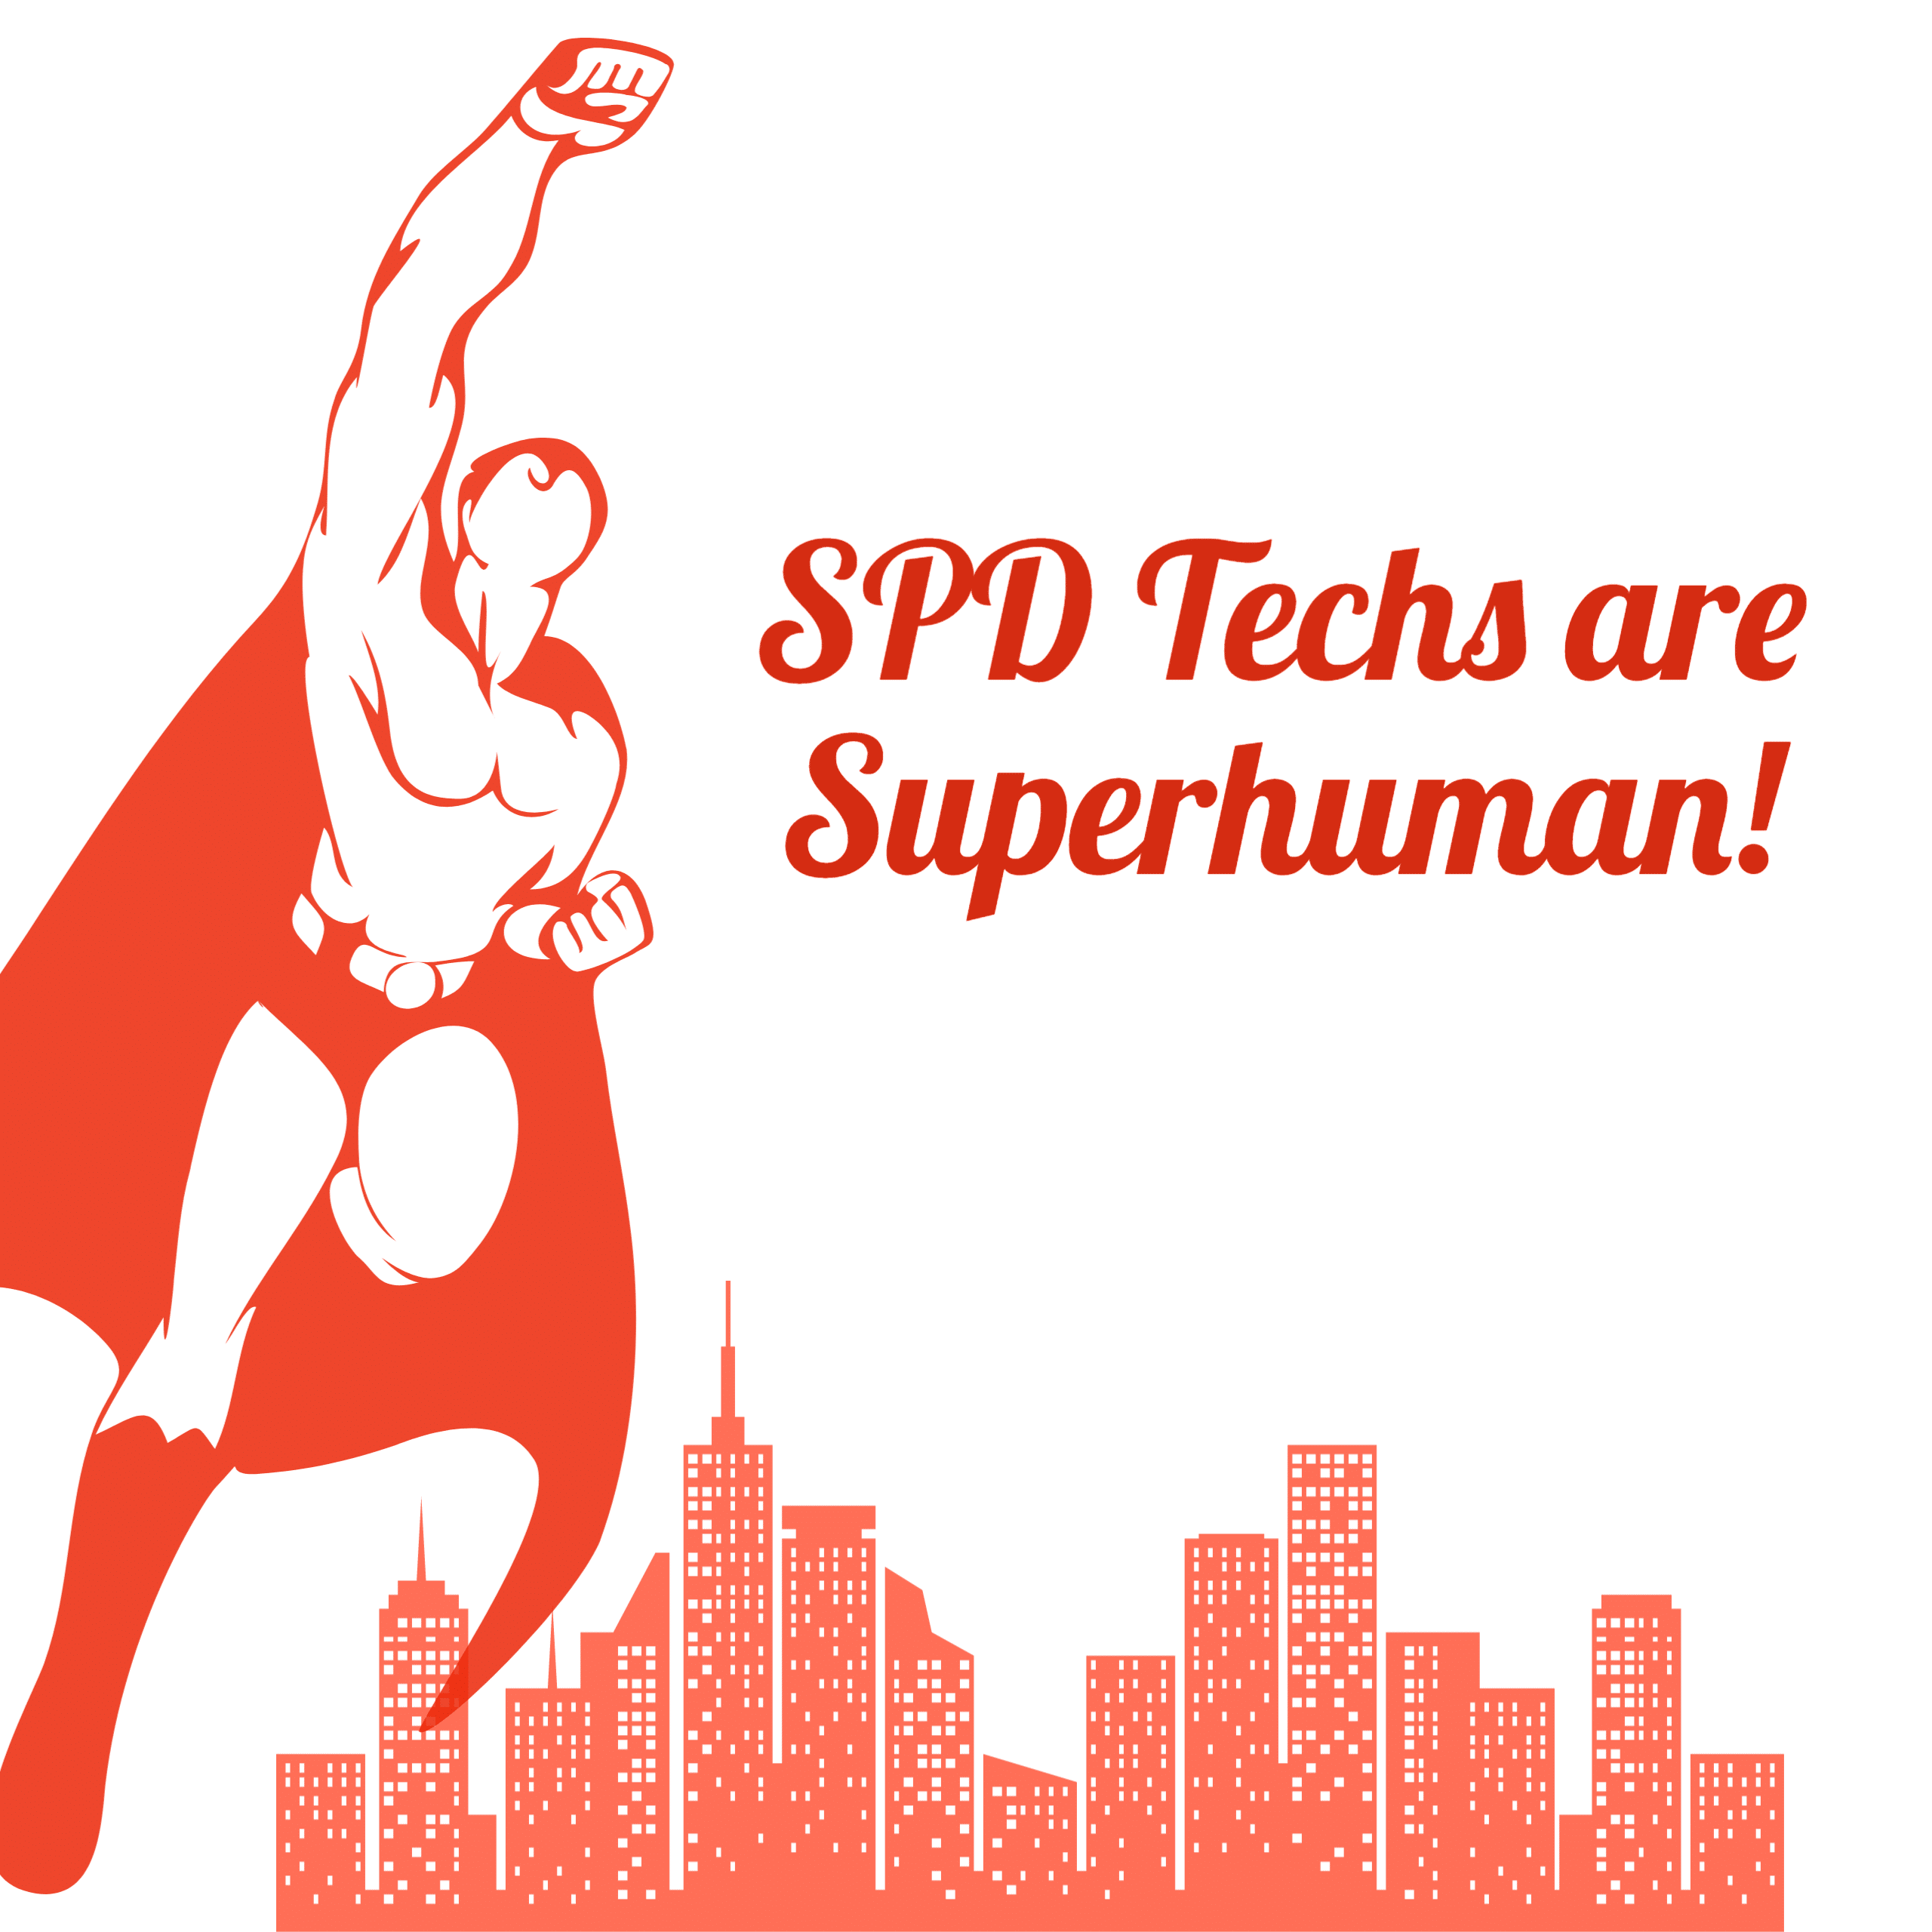 SPD techs are Superhumans